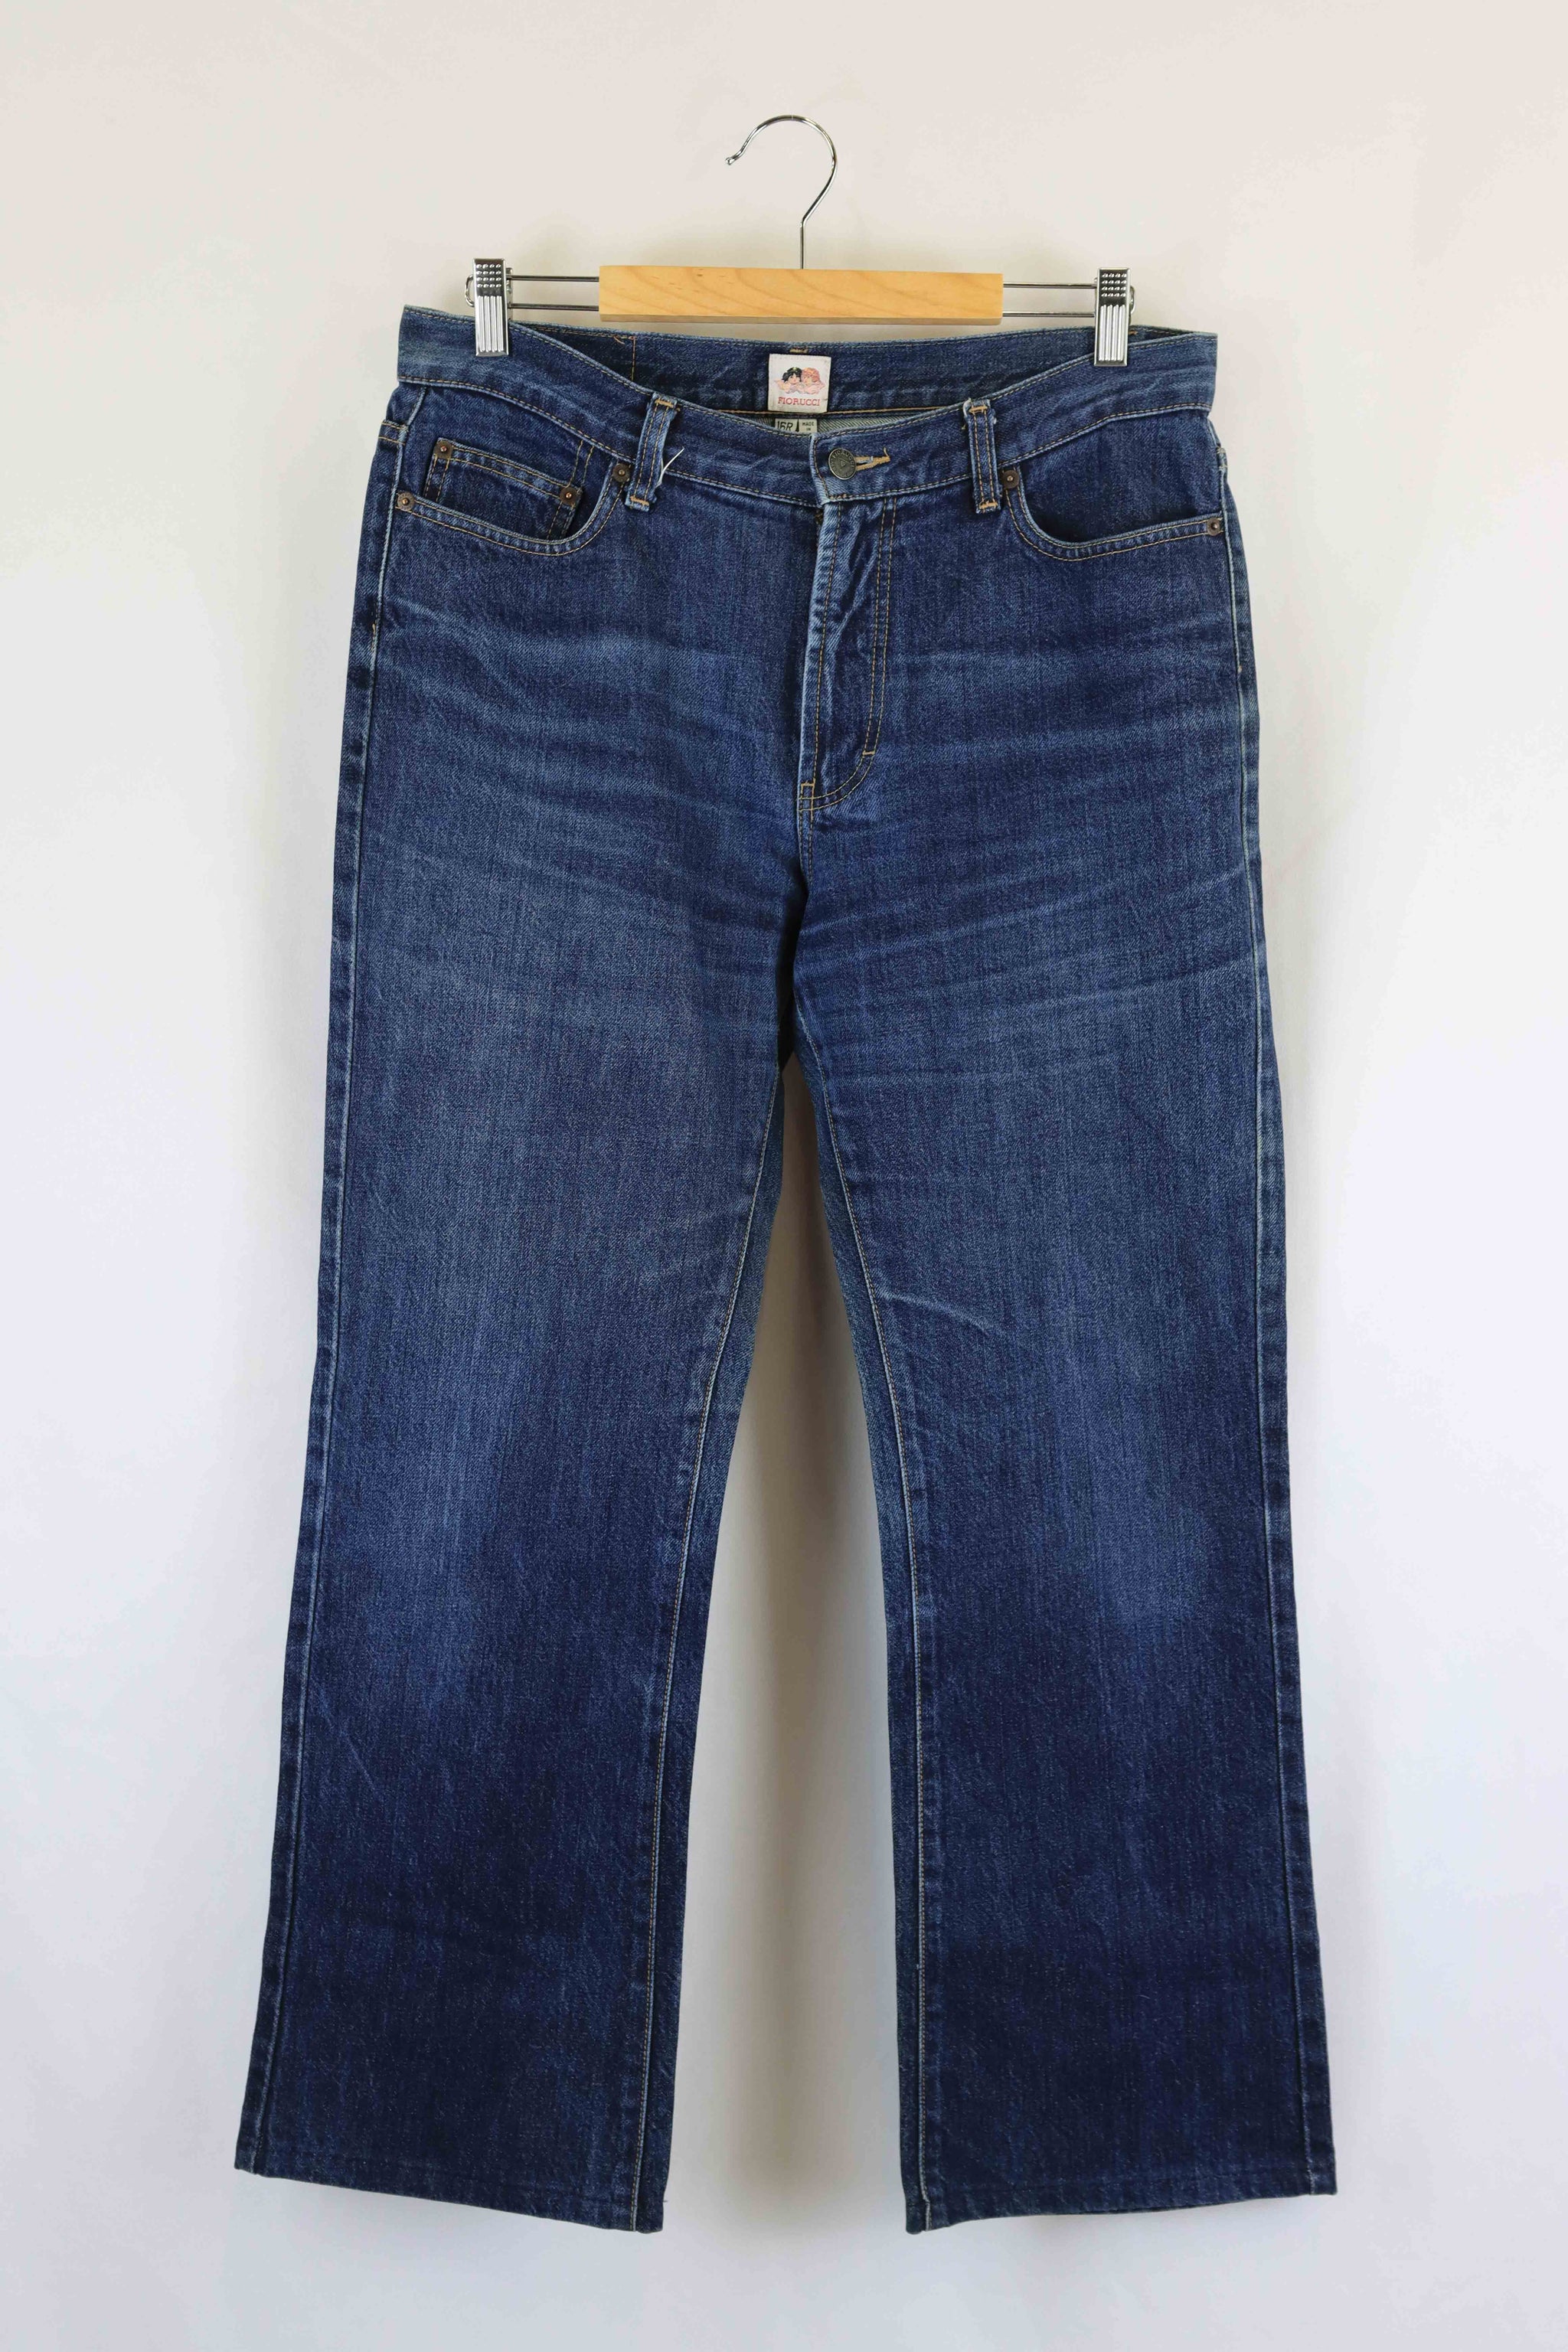 Fiorucci Blue Jeans 16 - Reluv Clothing Australia